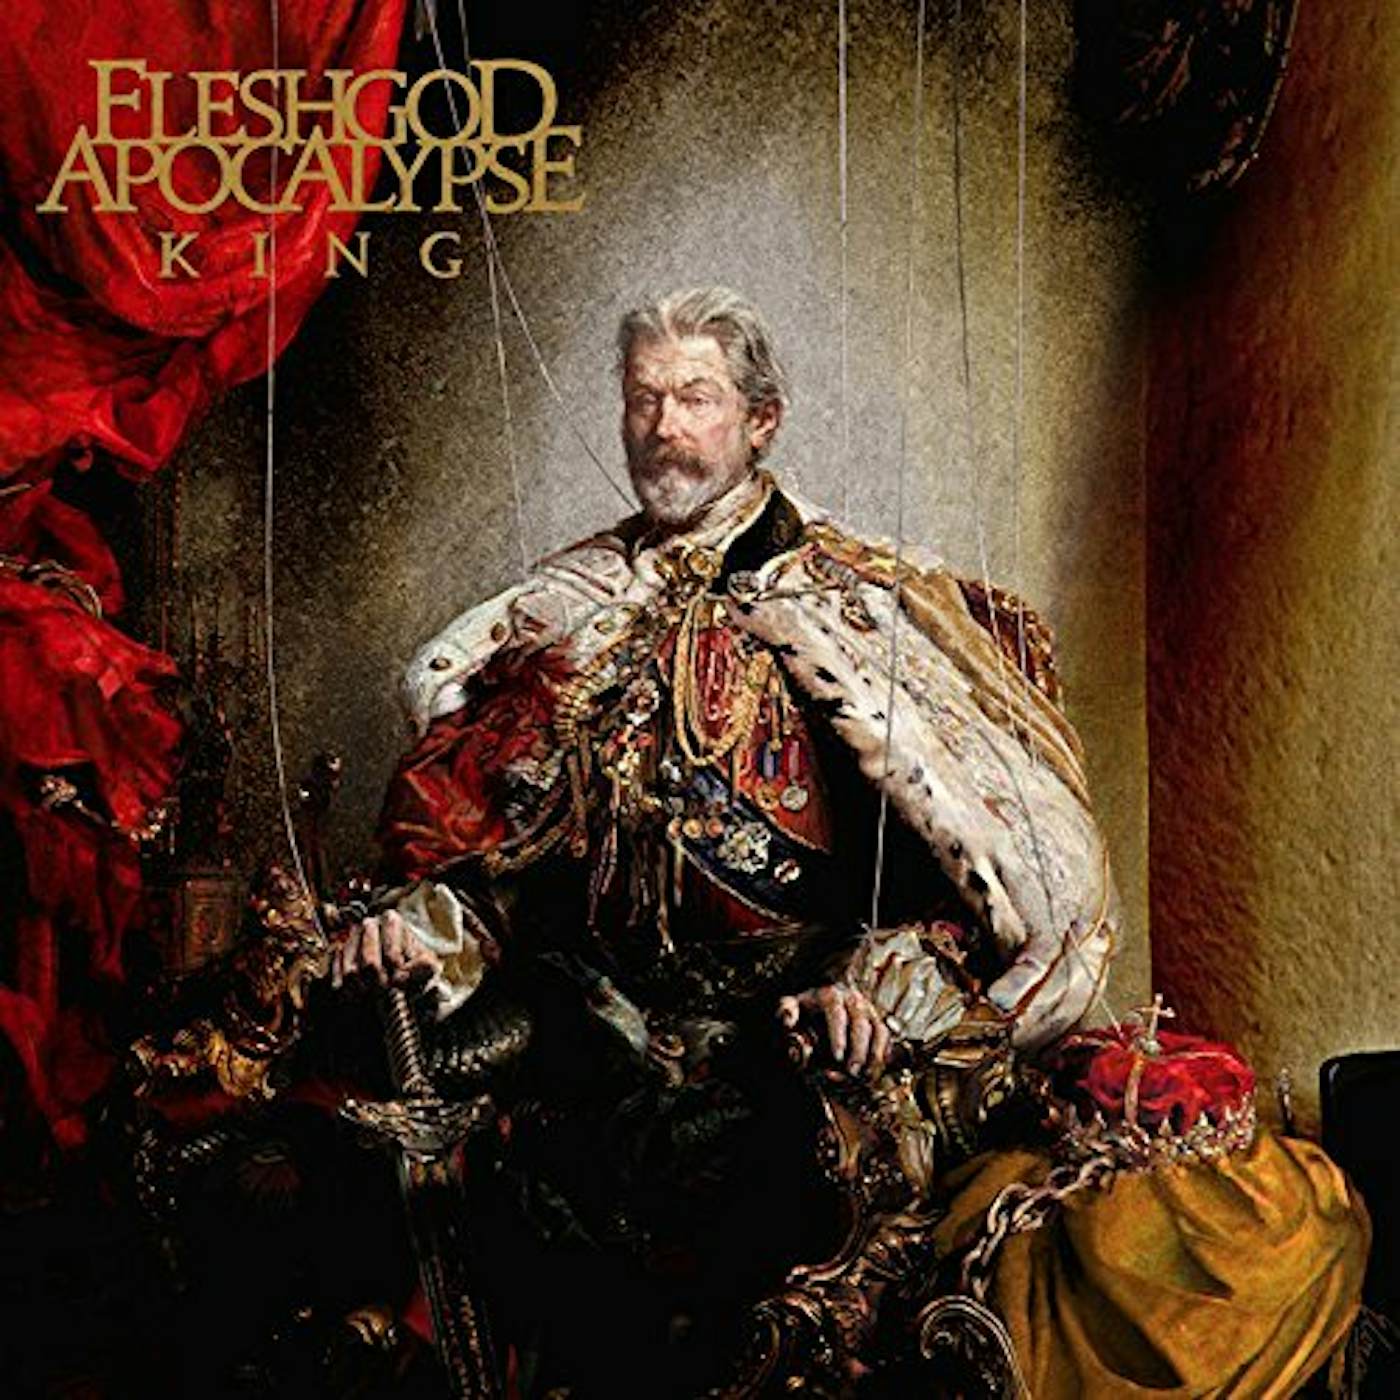 Fleshgod Apocalypse KING CD